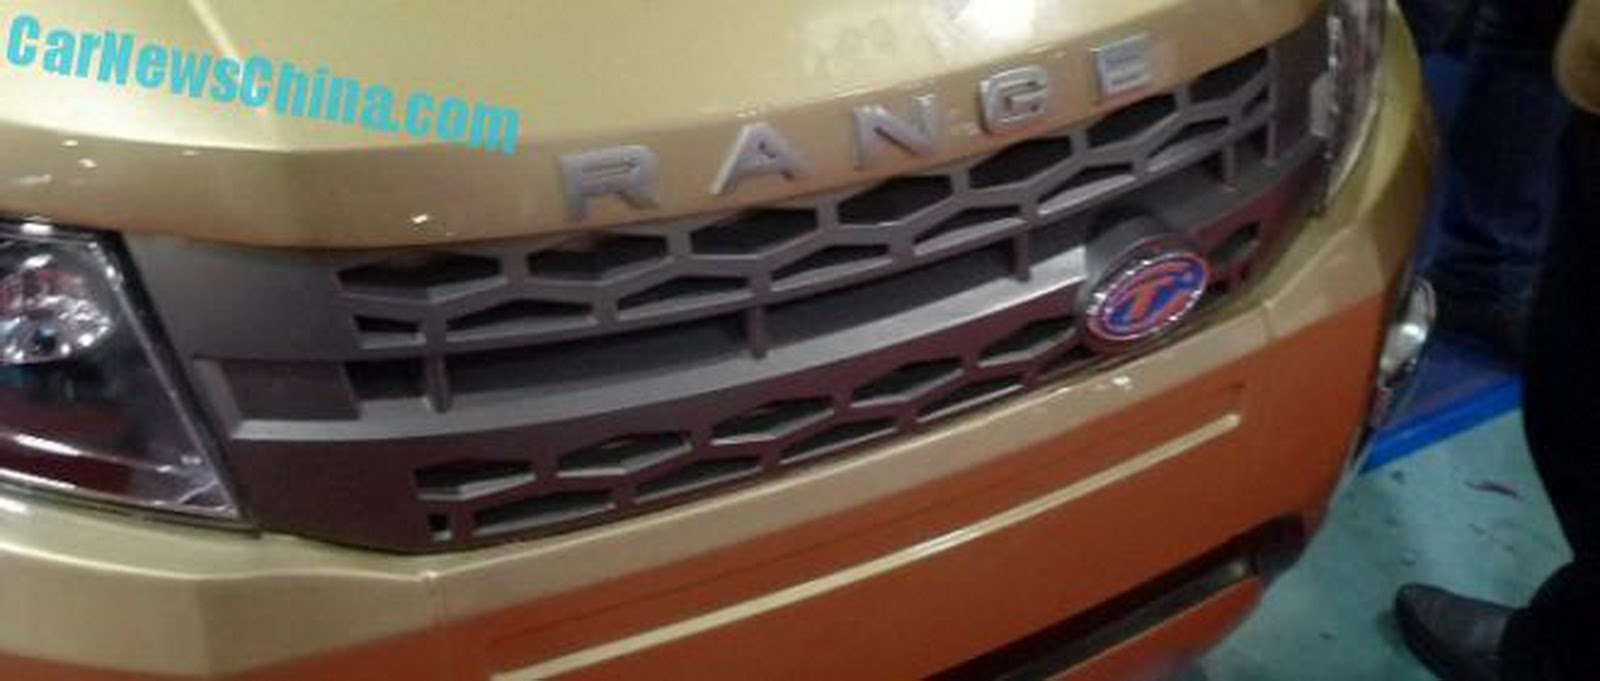 Range-Rover-China-Cl